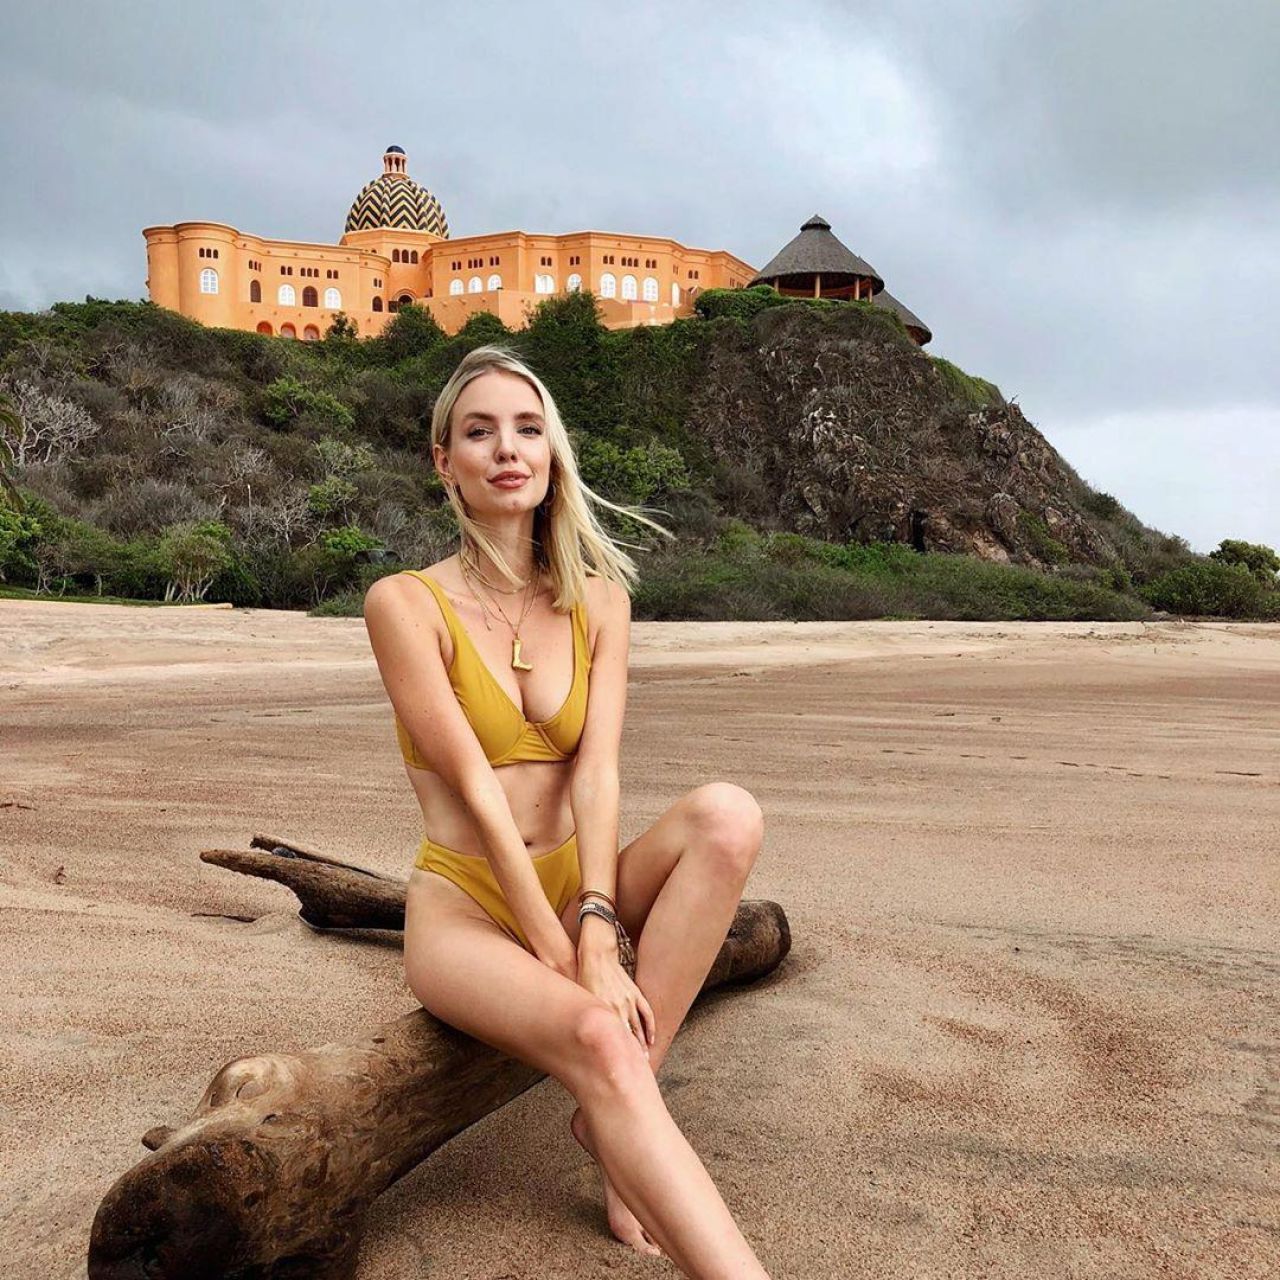 Mustard Long Crop Bikini Top worn by Leonie Hanne on her Instagram account ...